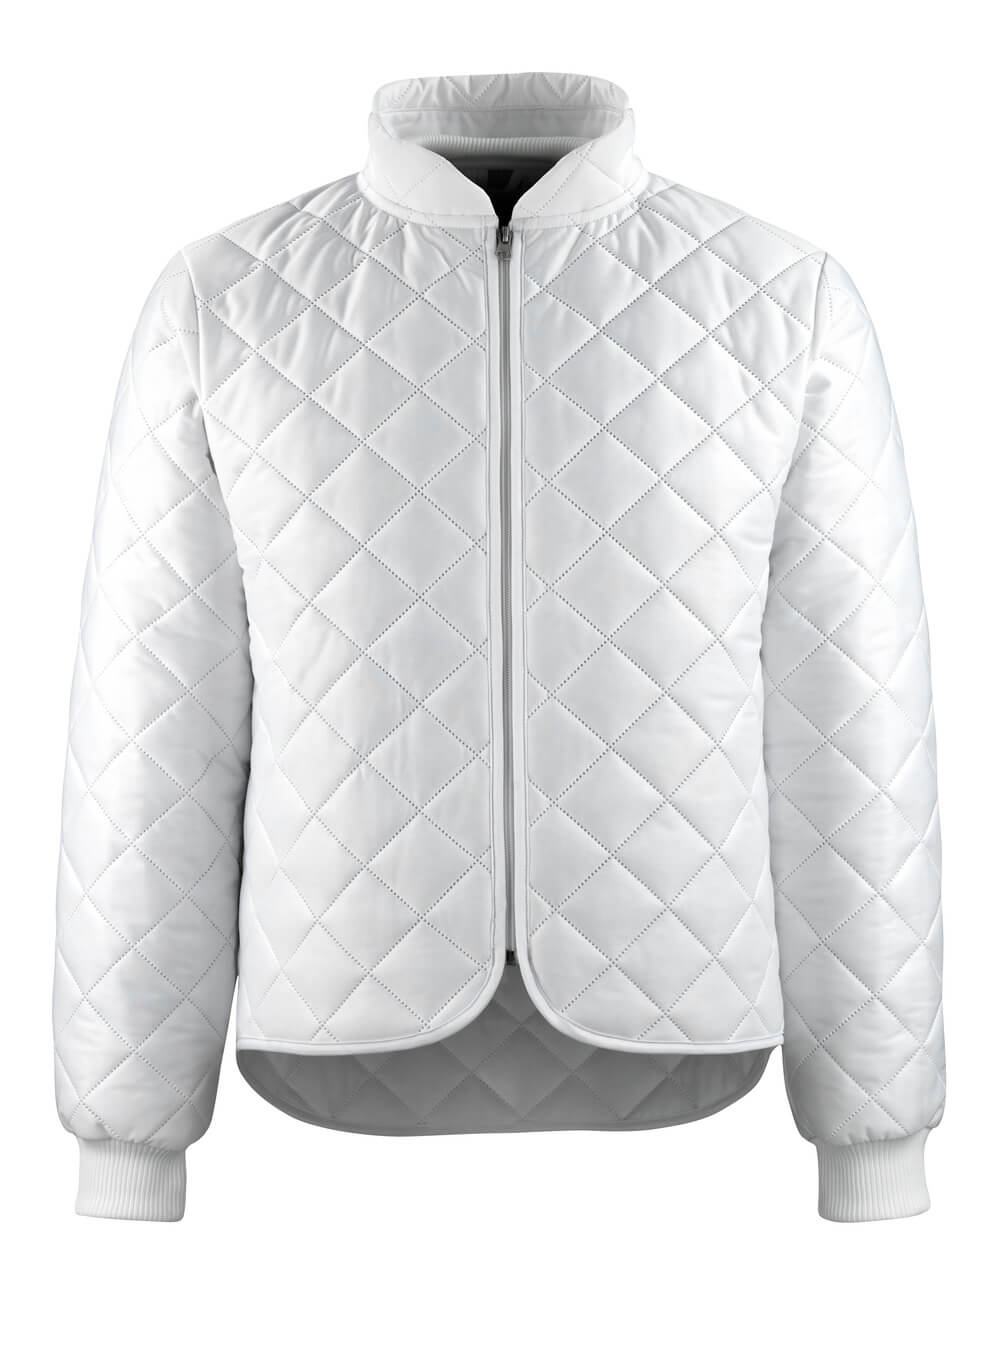 MASCOT®ORIGINALS Thermal jacket Whitby 14528 - DaltonSafety